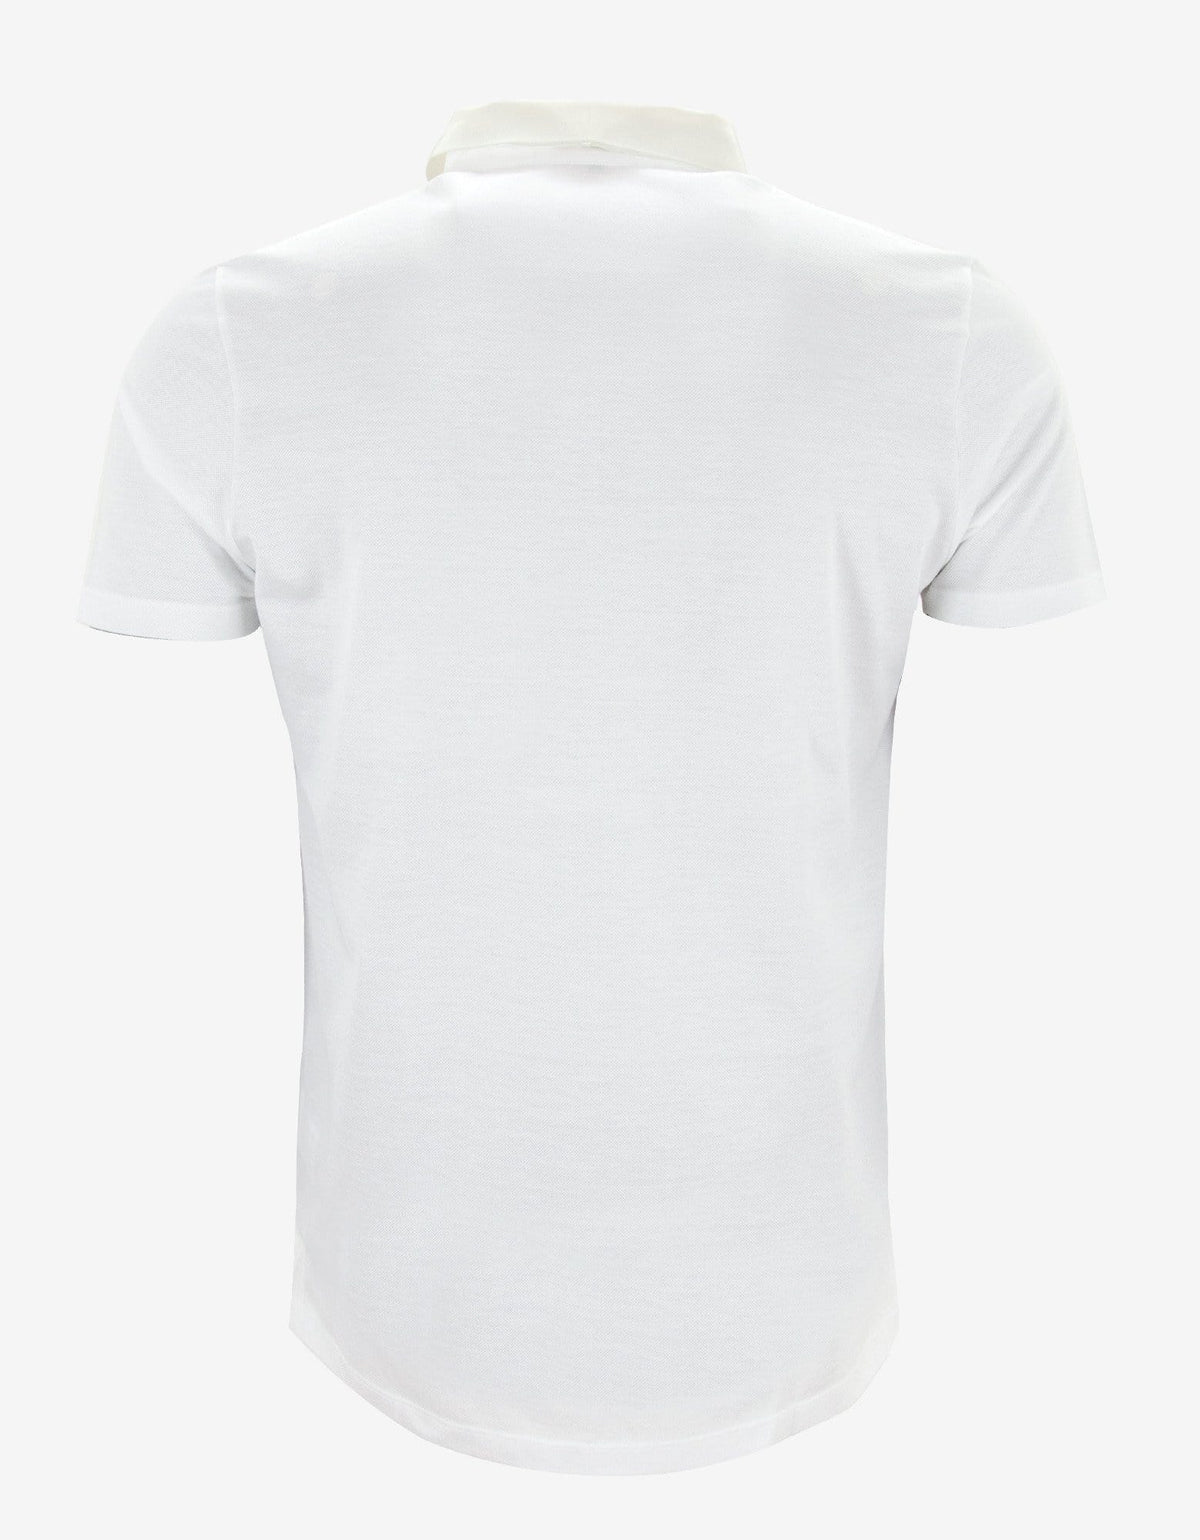 Lanvin White Polo T-Shirt with Grosgrain Collar